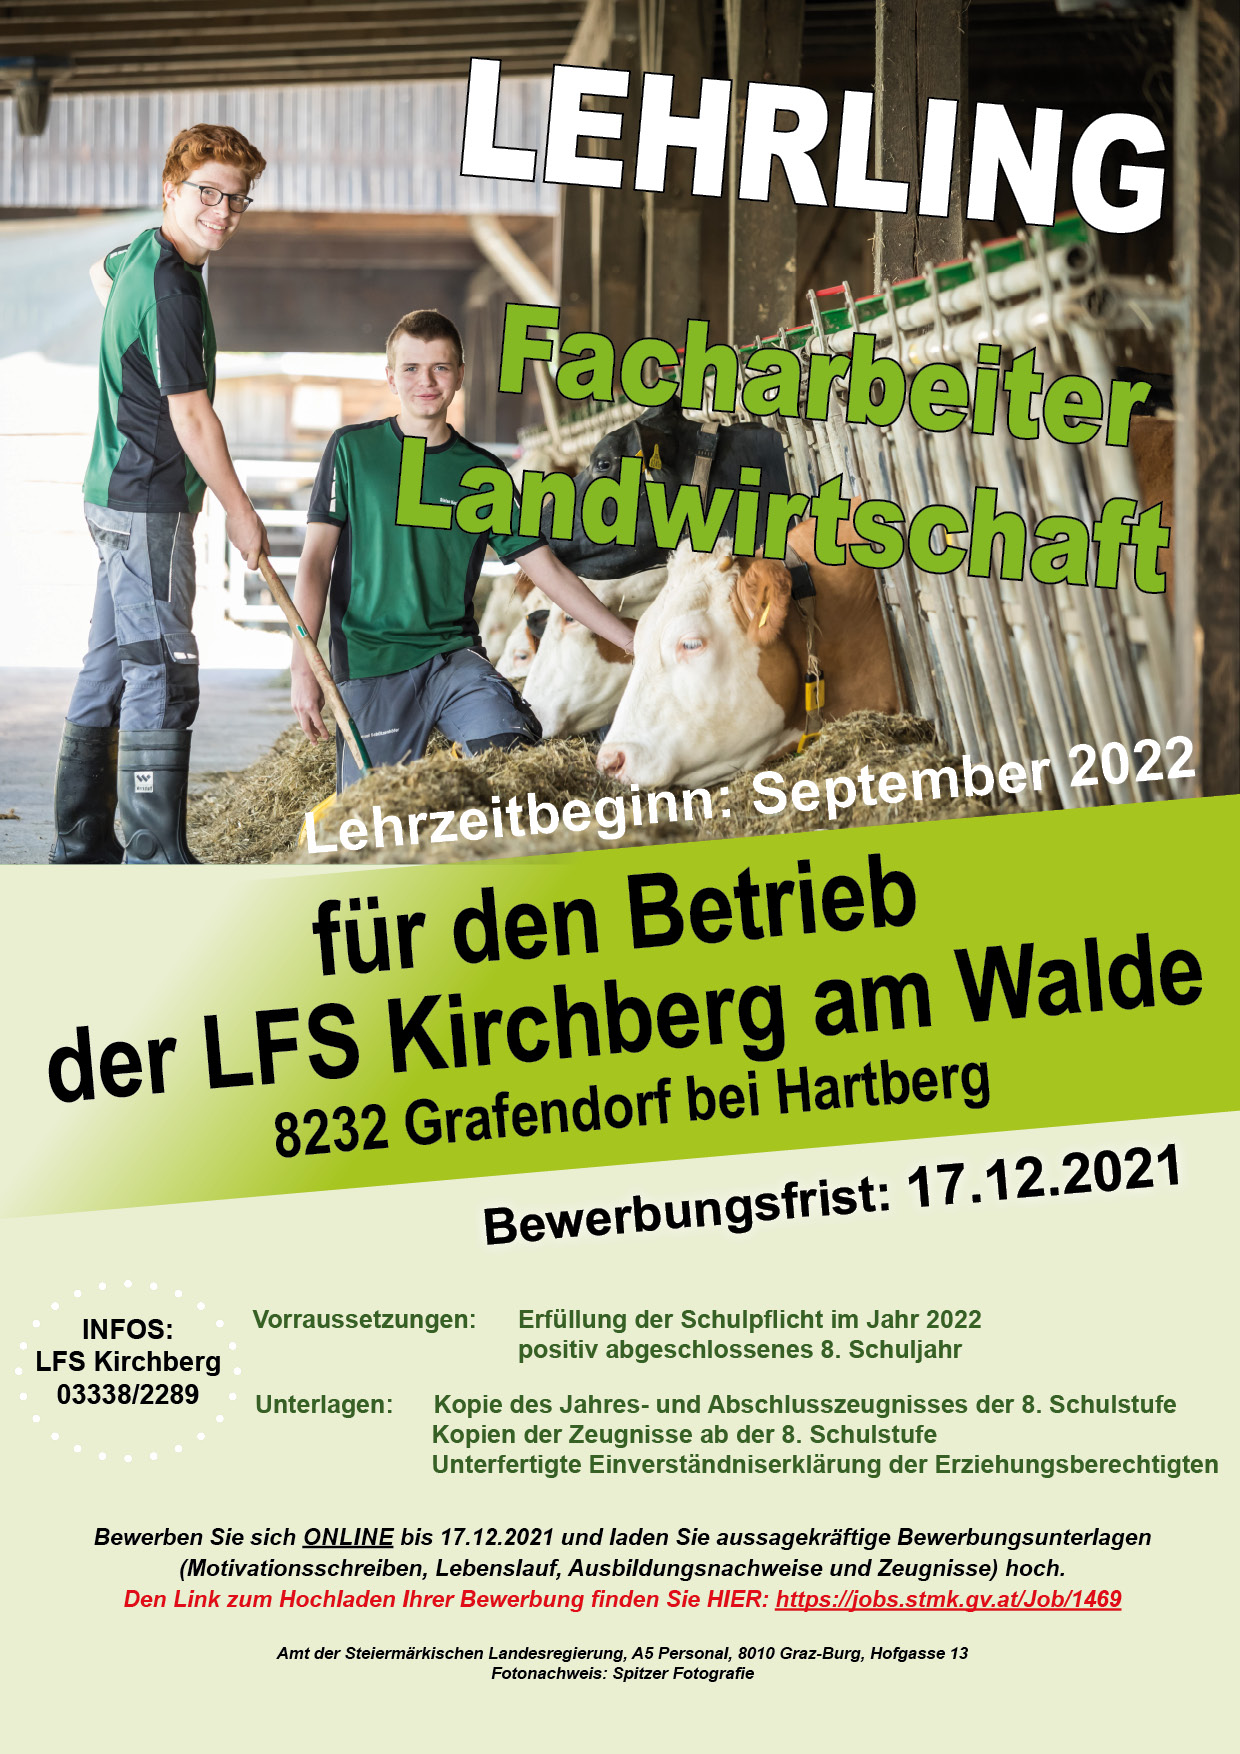 Landwirtschaftslehrling © LFS Kirchberg am Walde